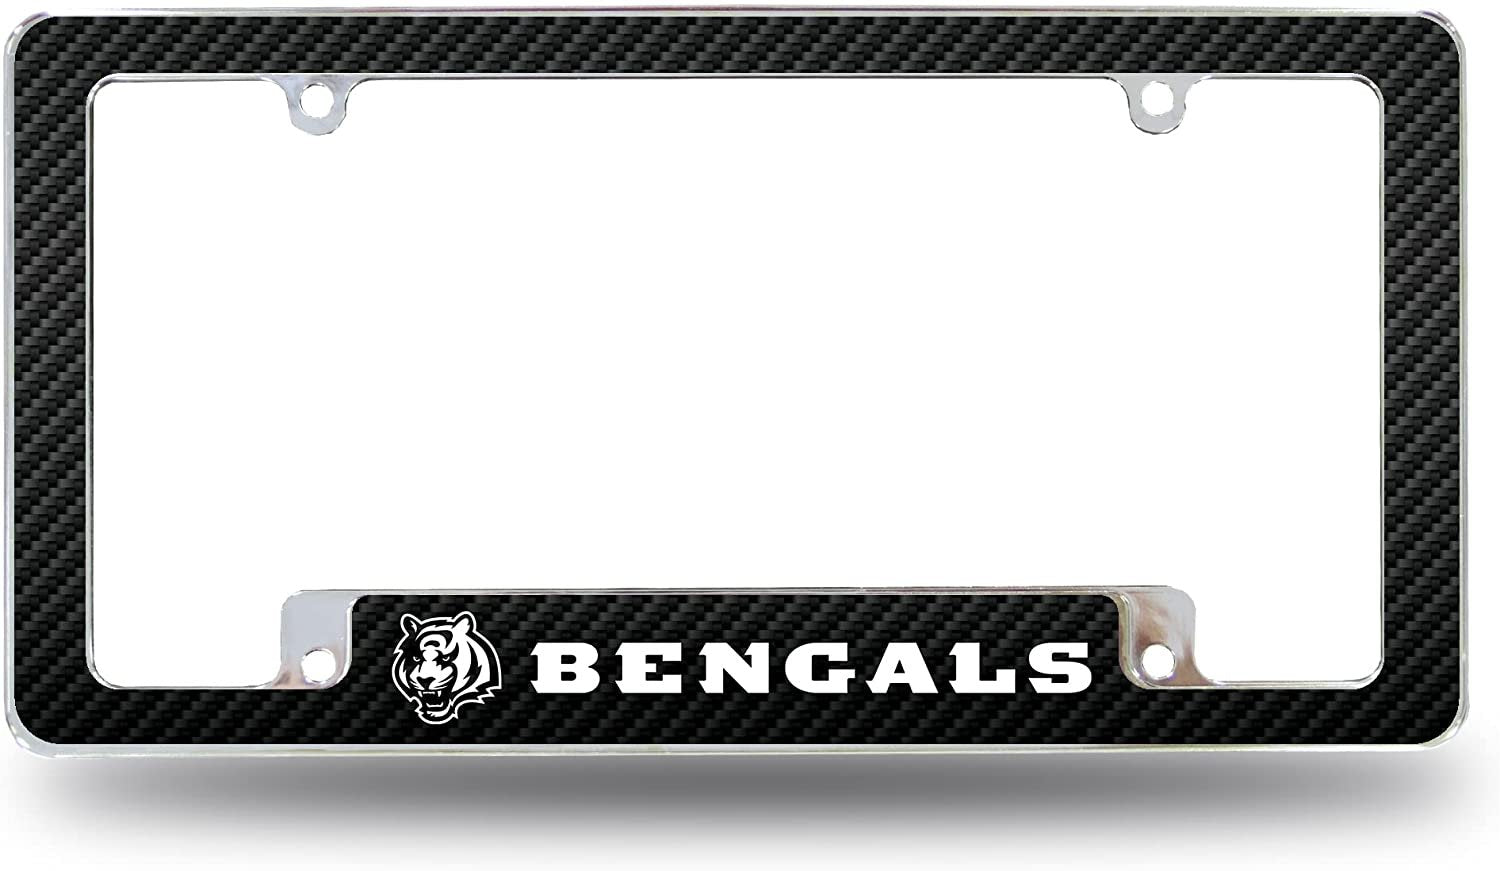 Cincinnati Bengals Metal License Plate Frame Chrome Tag Cover Carbon Fiber Design 6x12 Inch